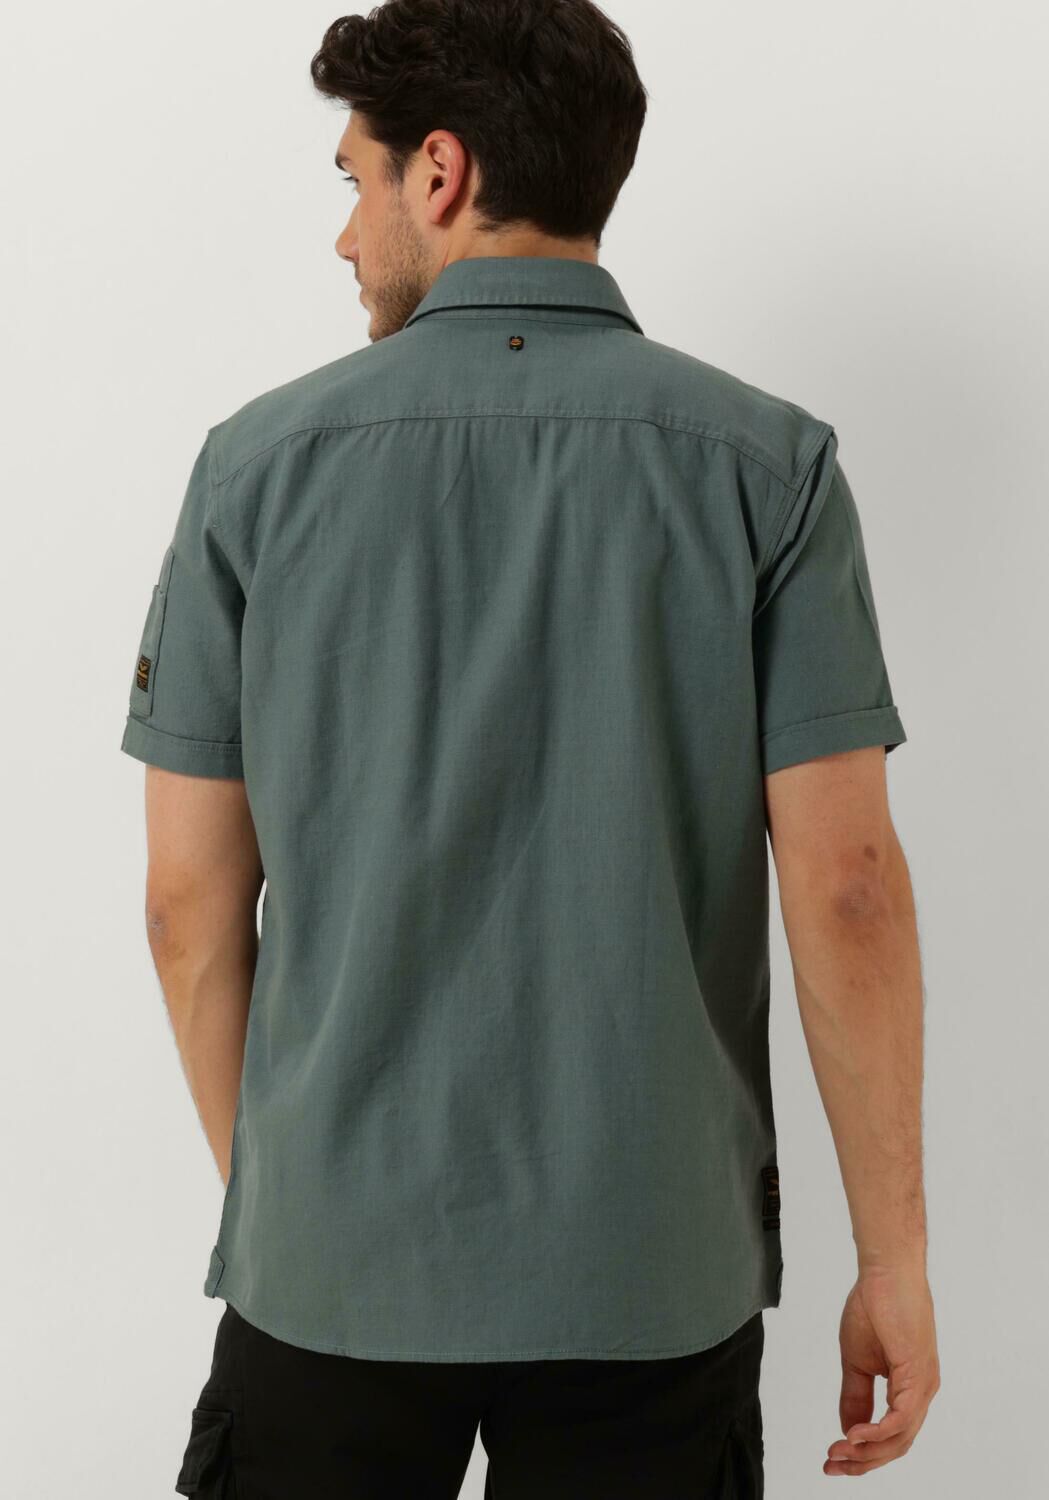 PME LEGEND Heren Overhemden Short Sleeve Shirt Ctn Slub Groen